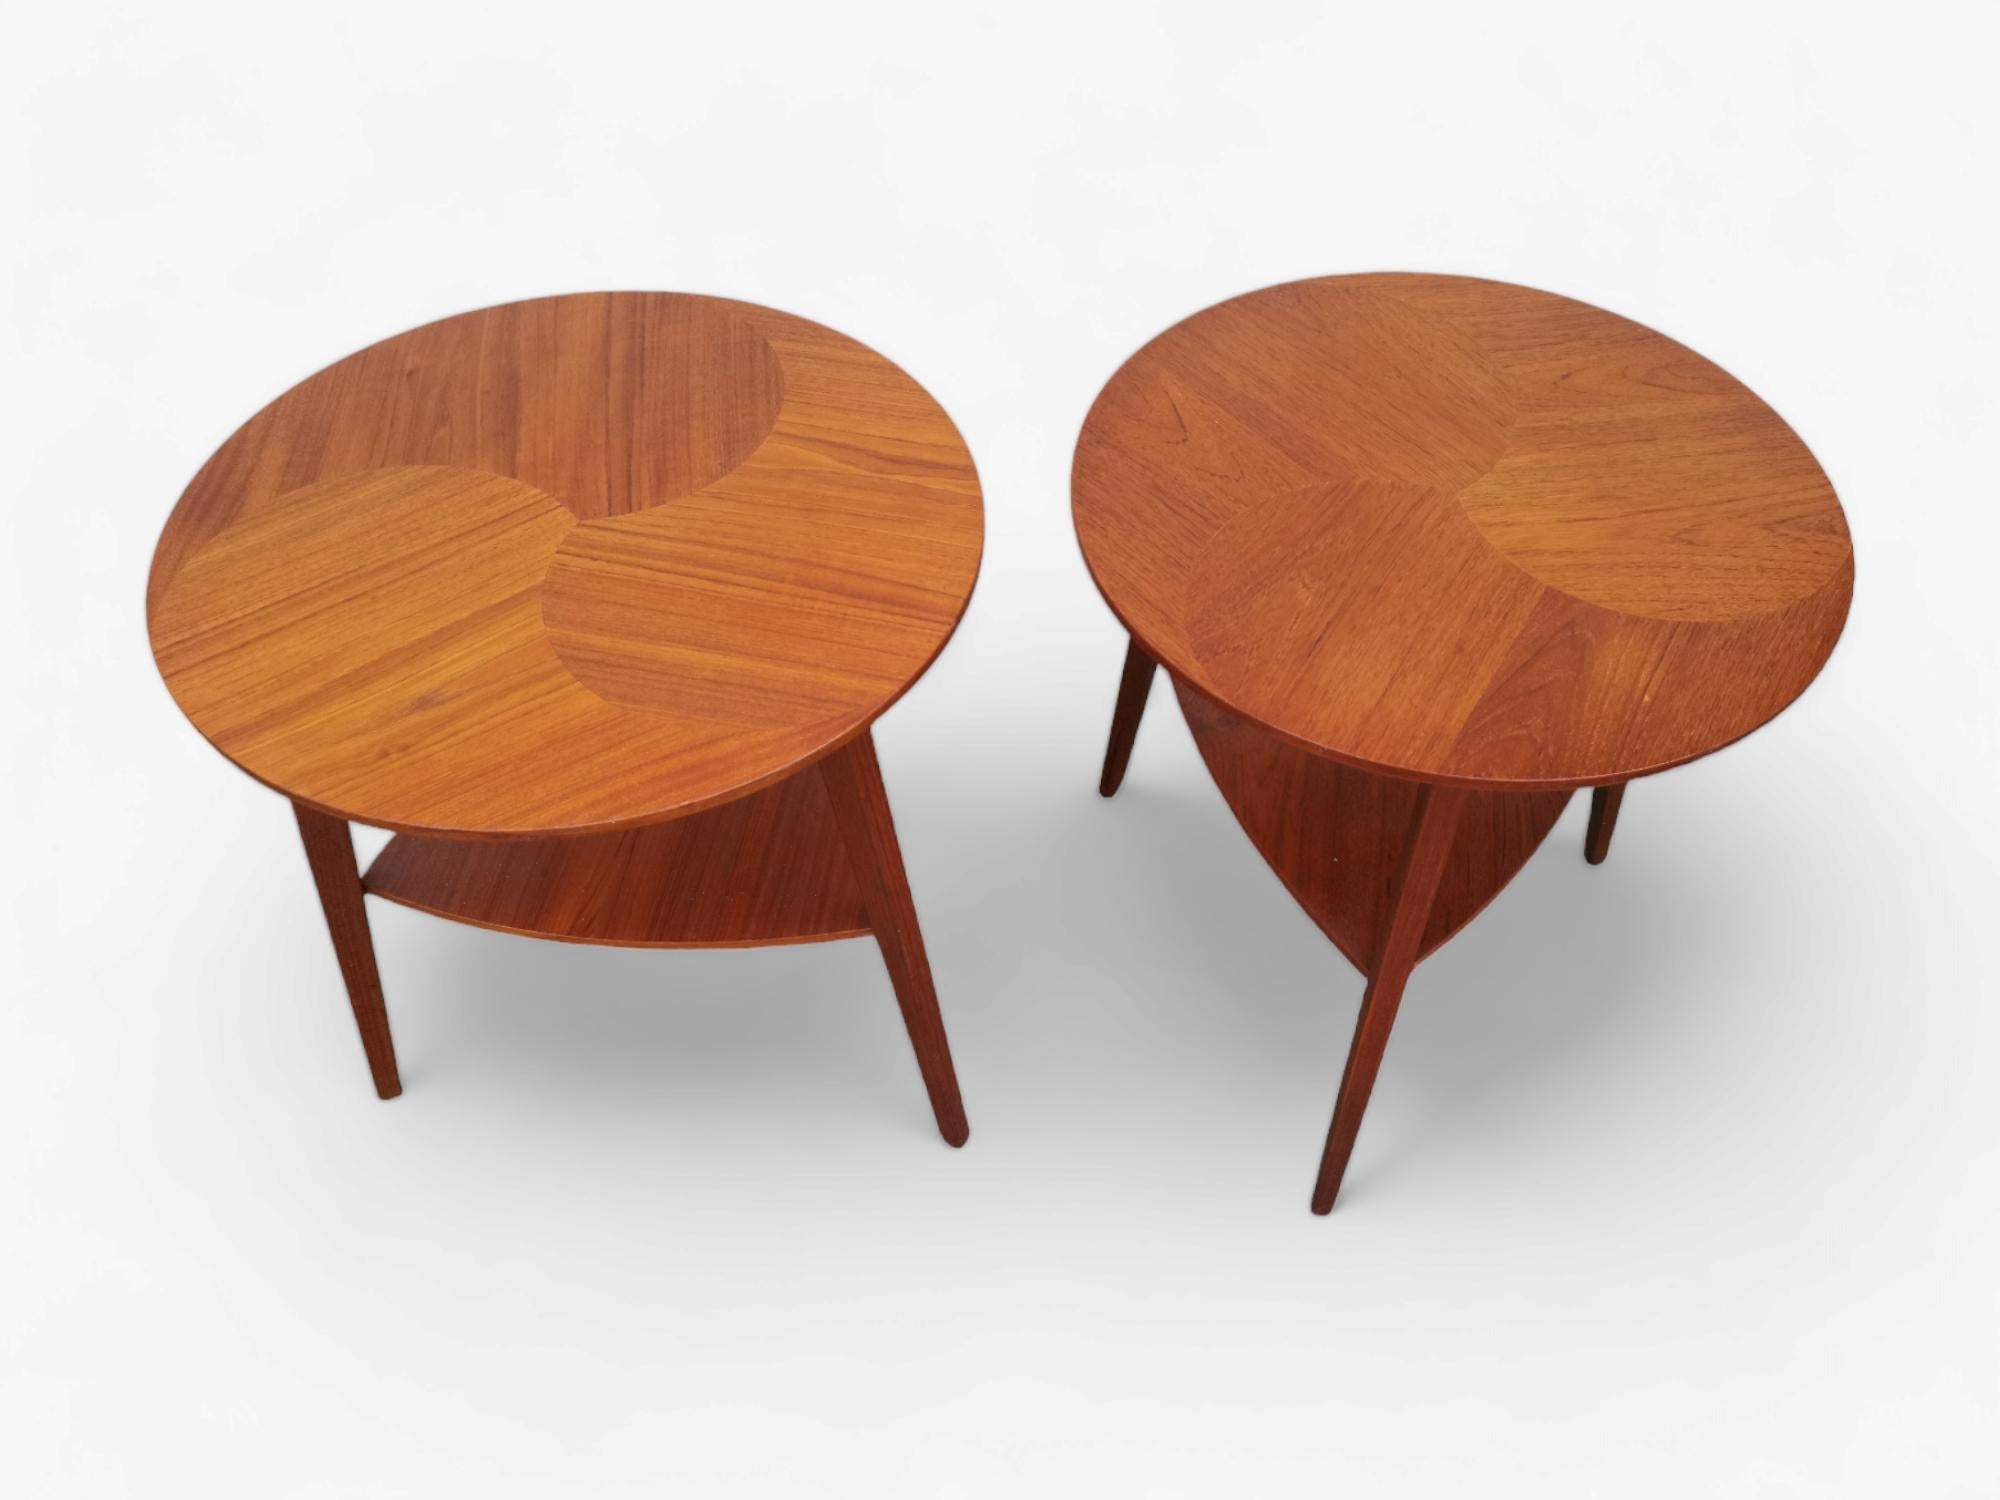 A beautiful Danish pair of Round Side tables, in good condition. Attributtet to Jørgen Aakjær Jørgensen as Designer